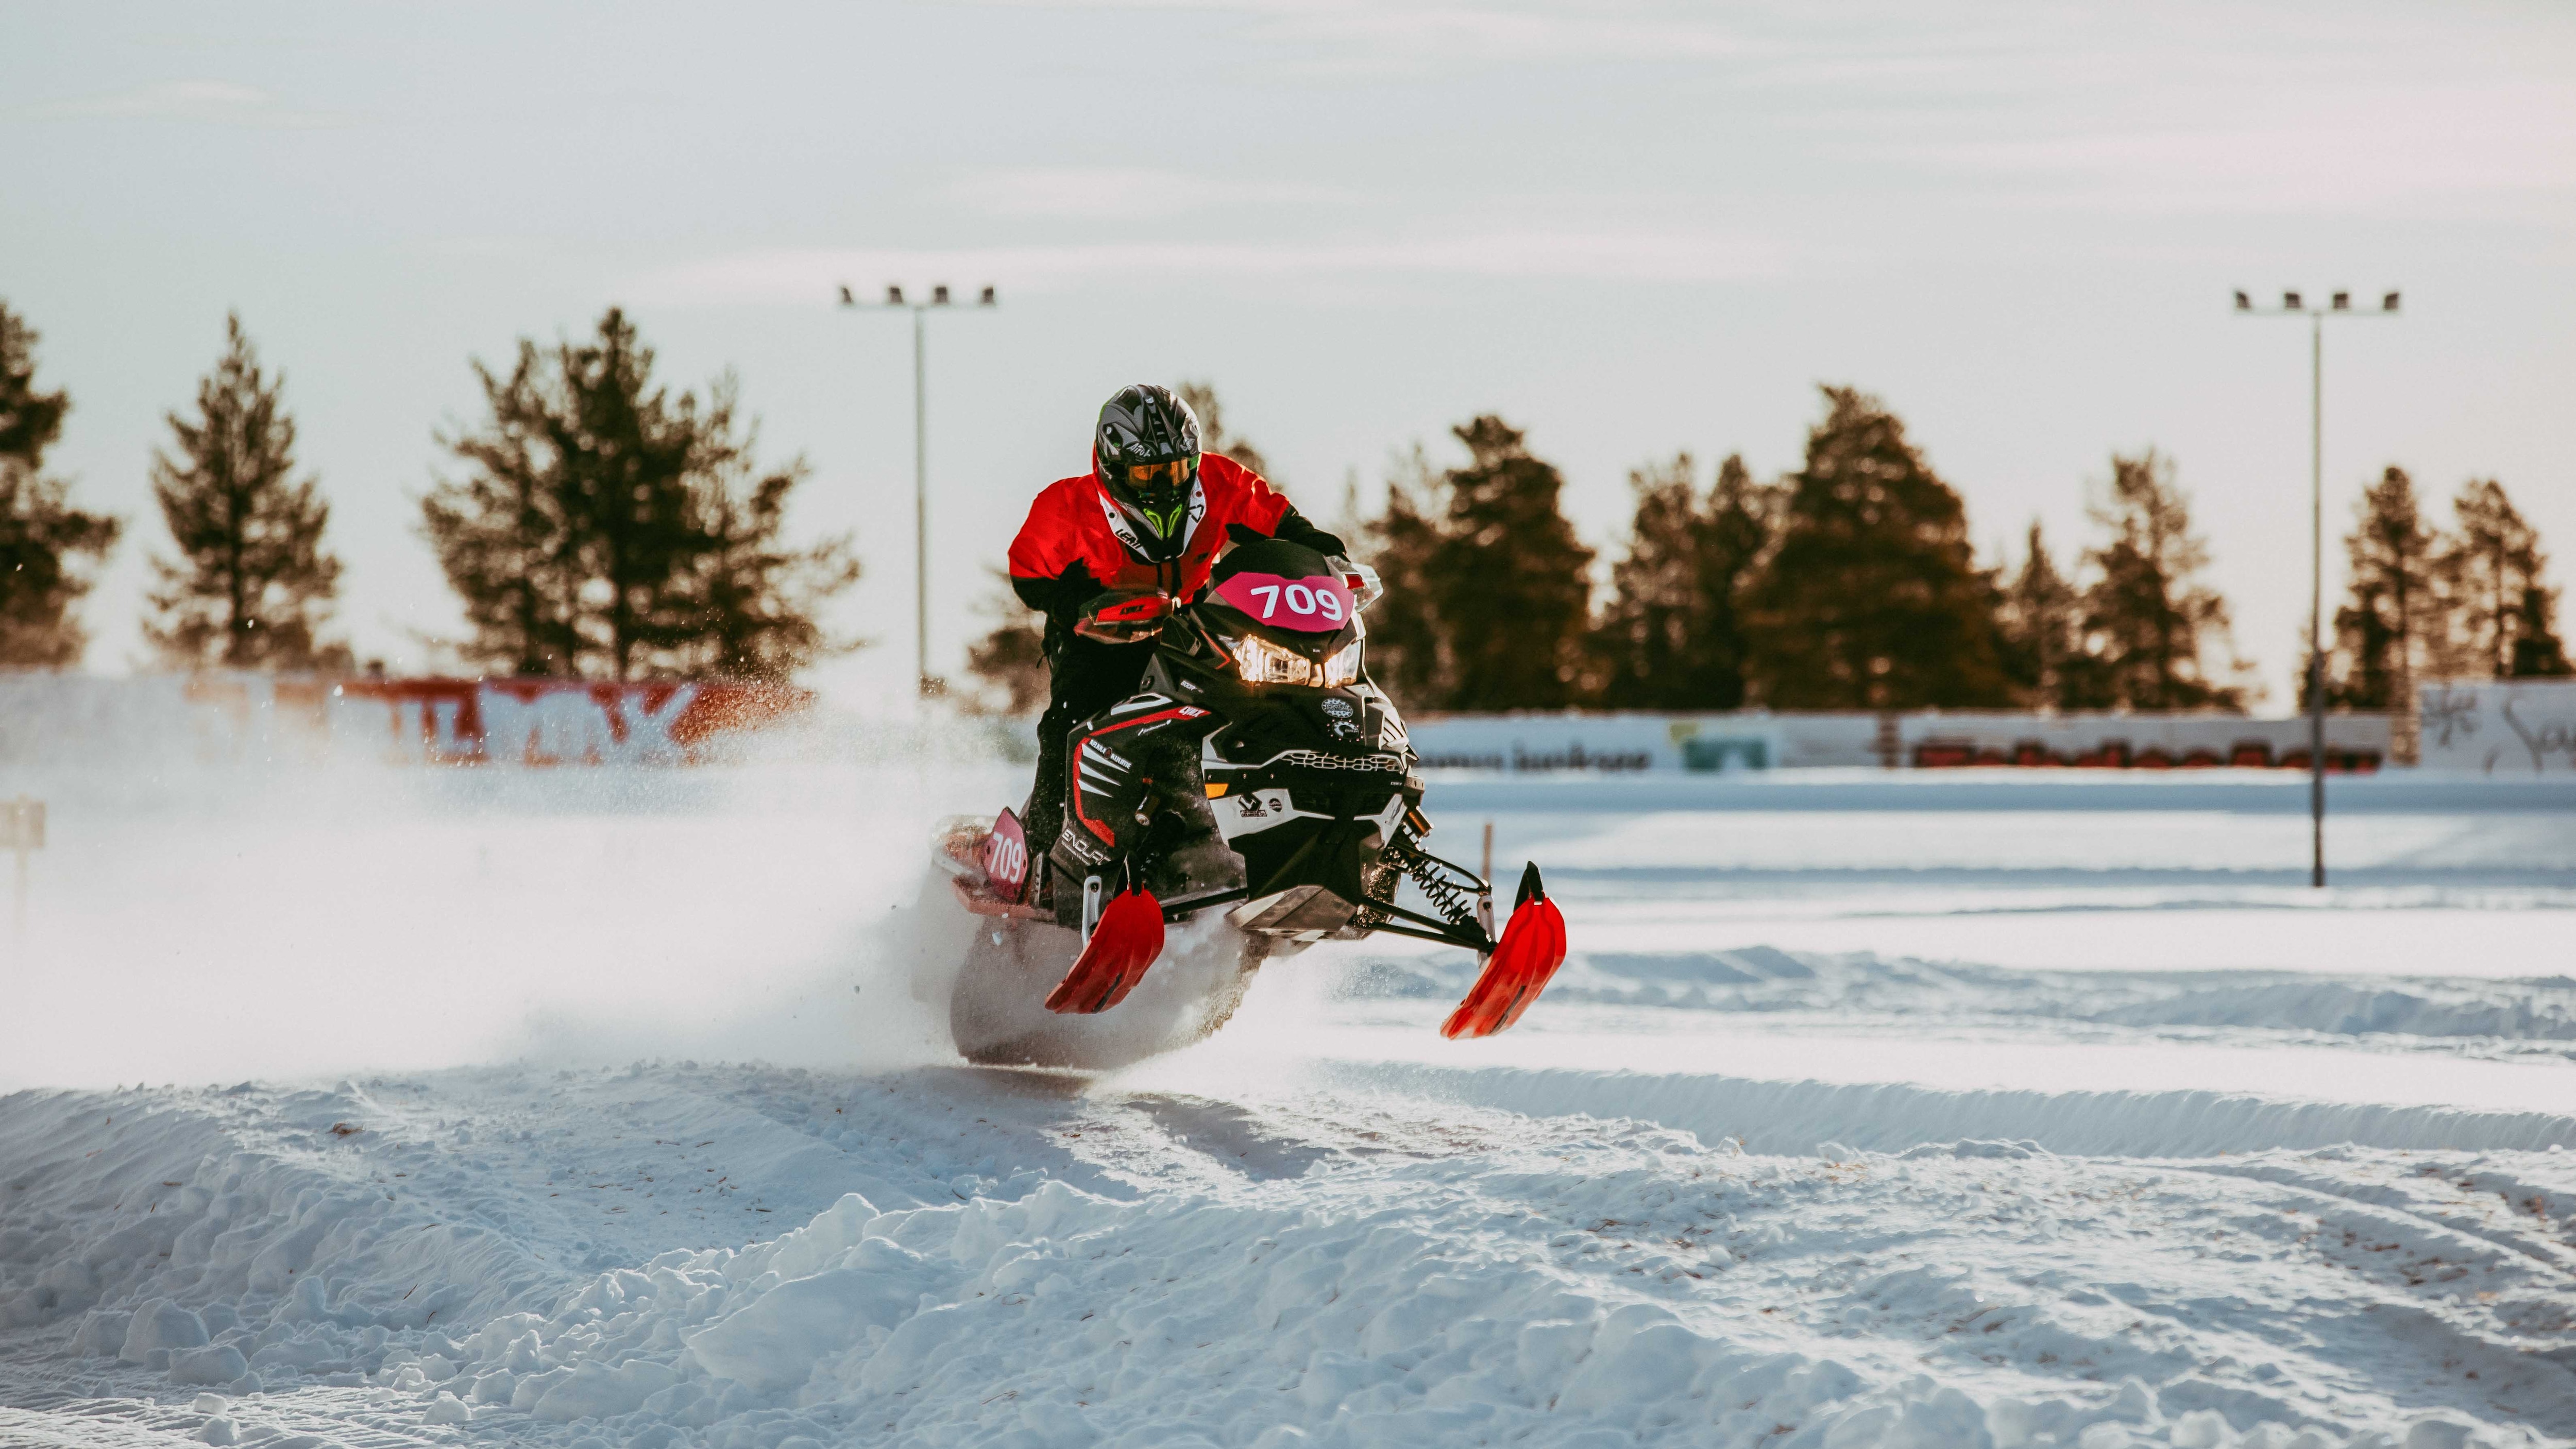 Lynx Rave Enduro snowmobile riding on race track